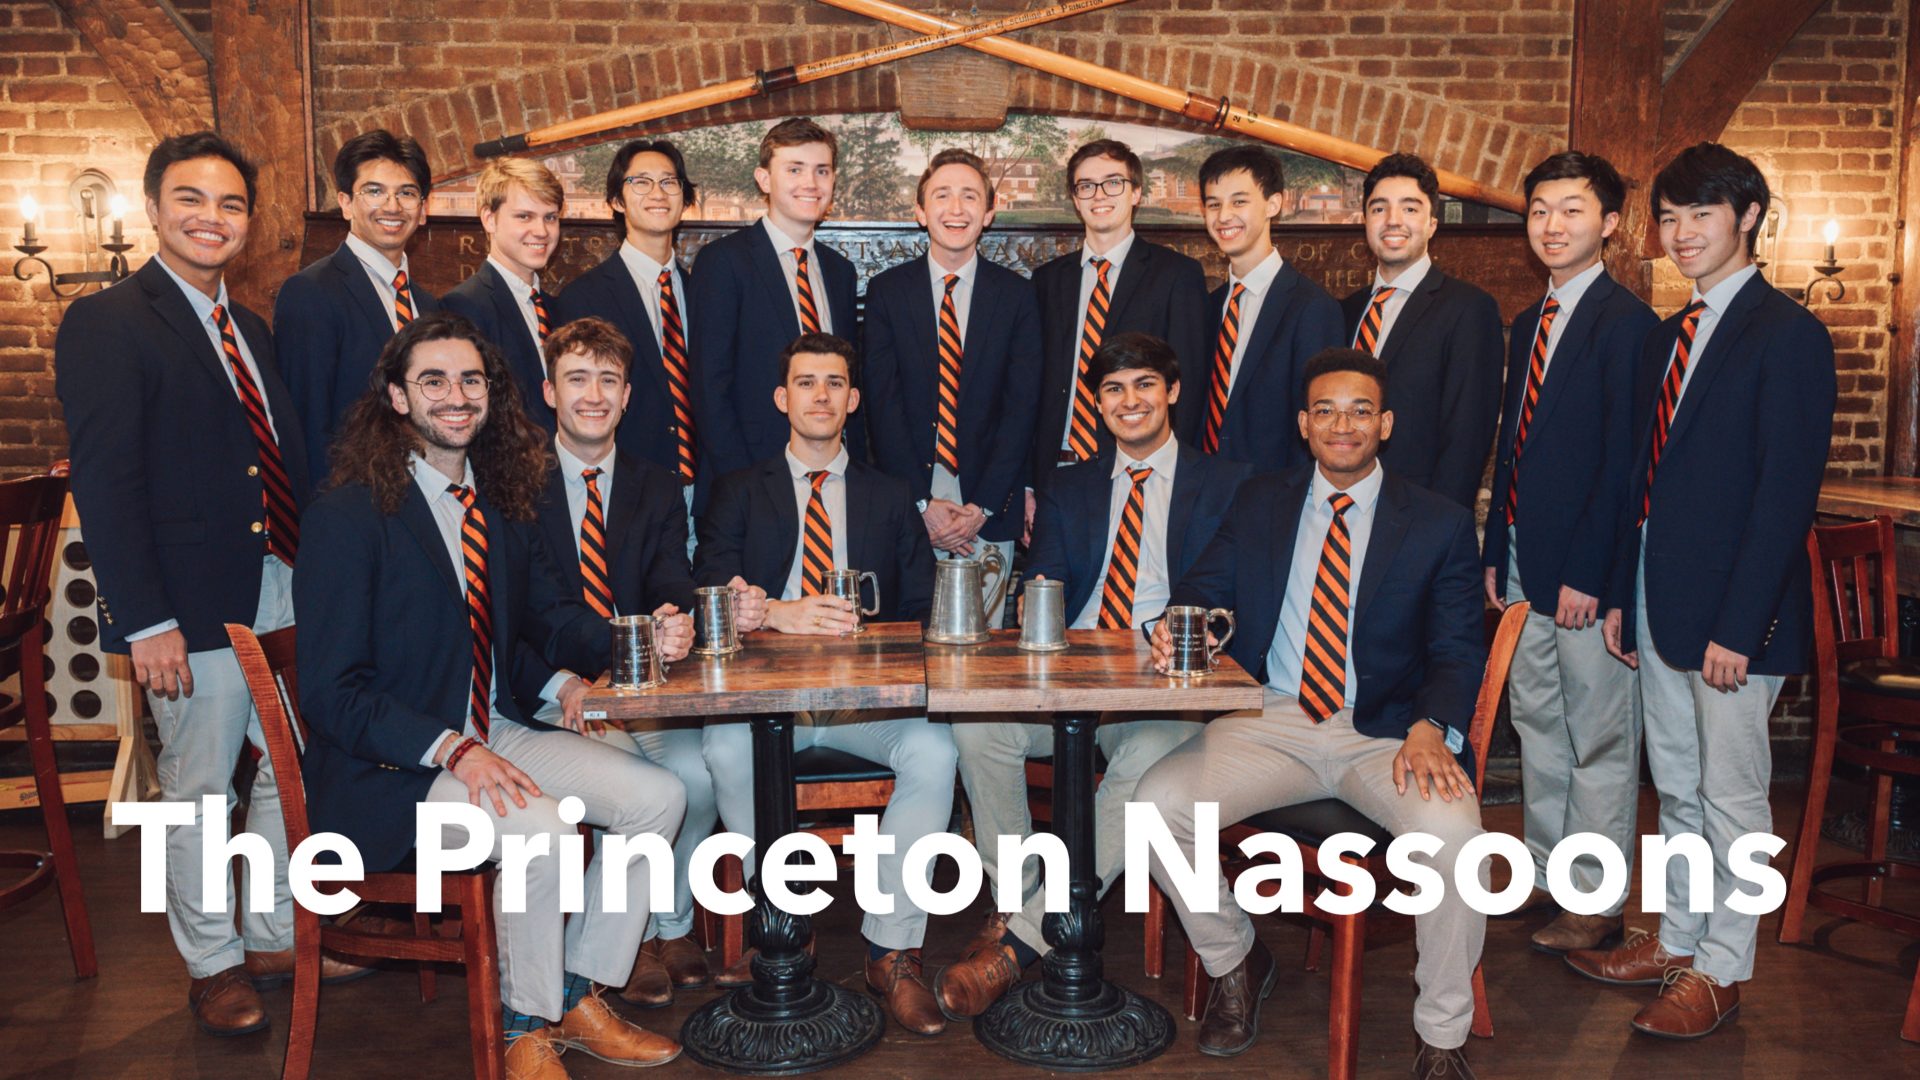 FREE concert: Princeton Nassoons A Cappella in Westport Wed Oct 18 7 PM